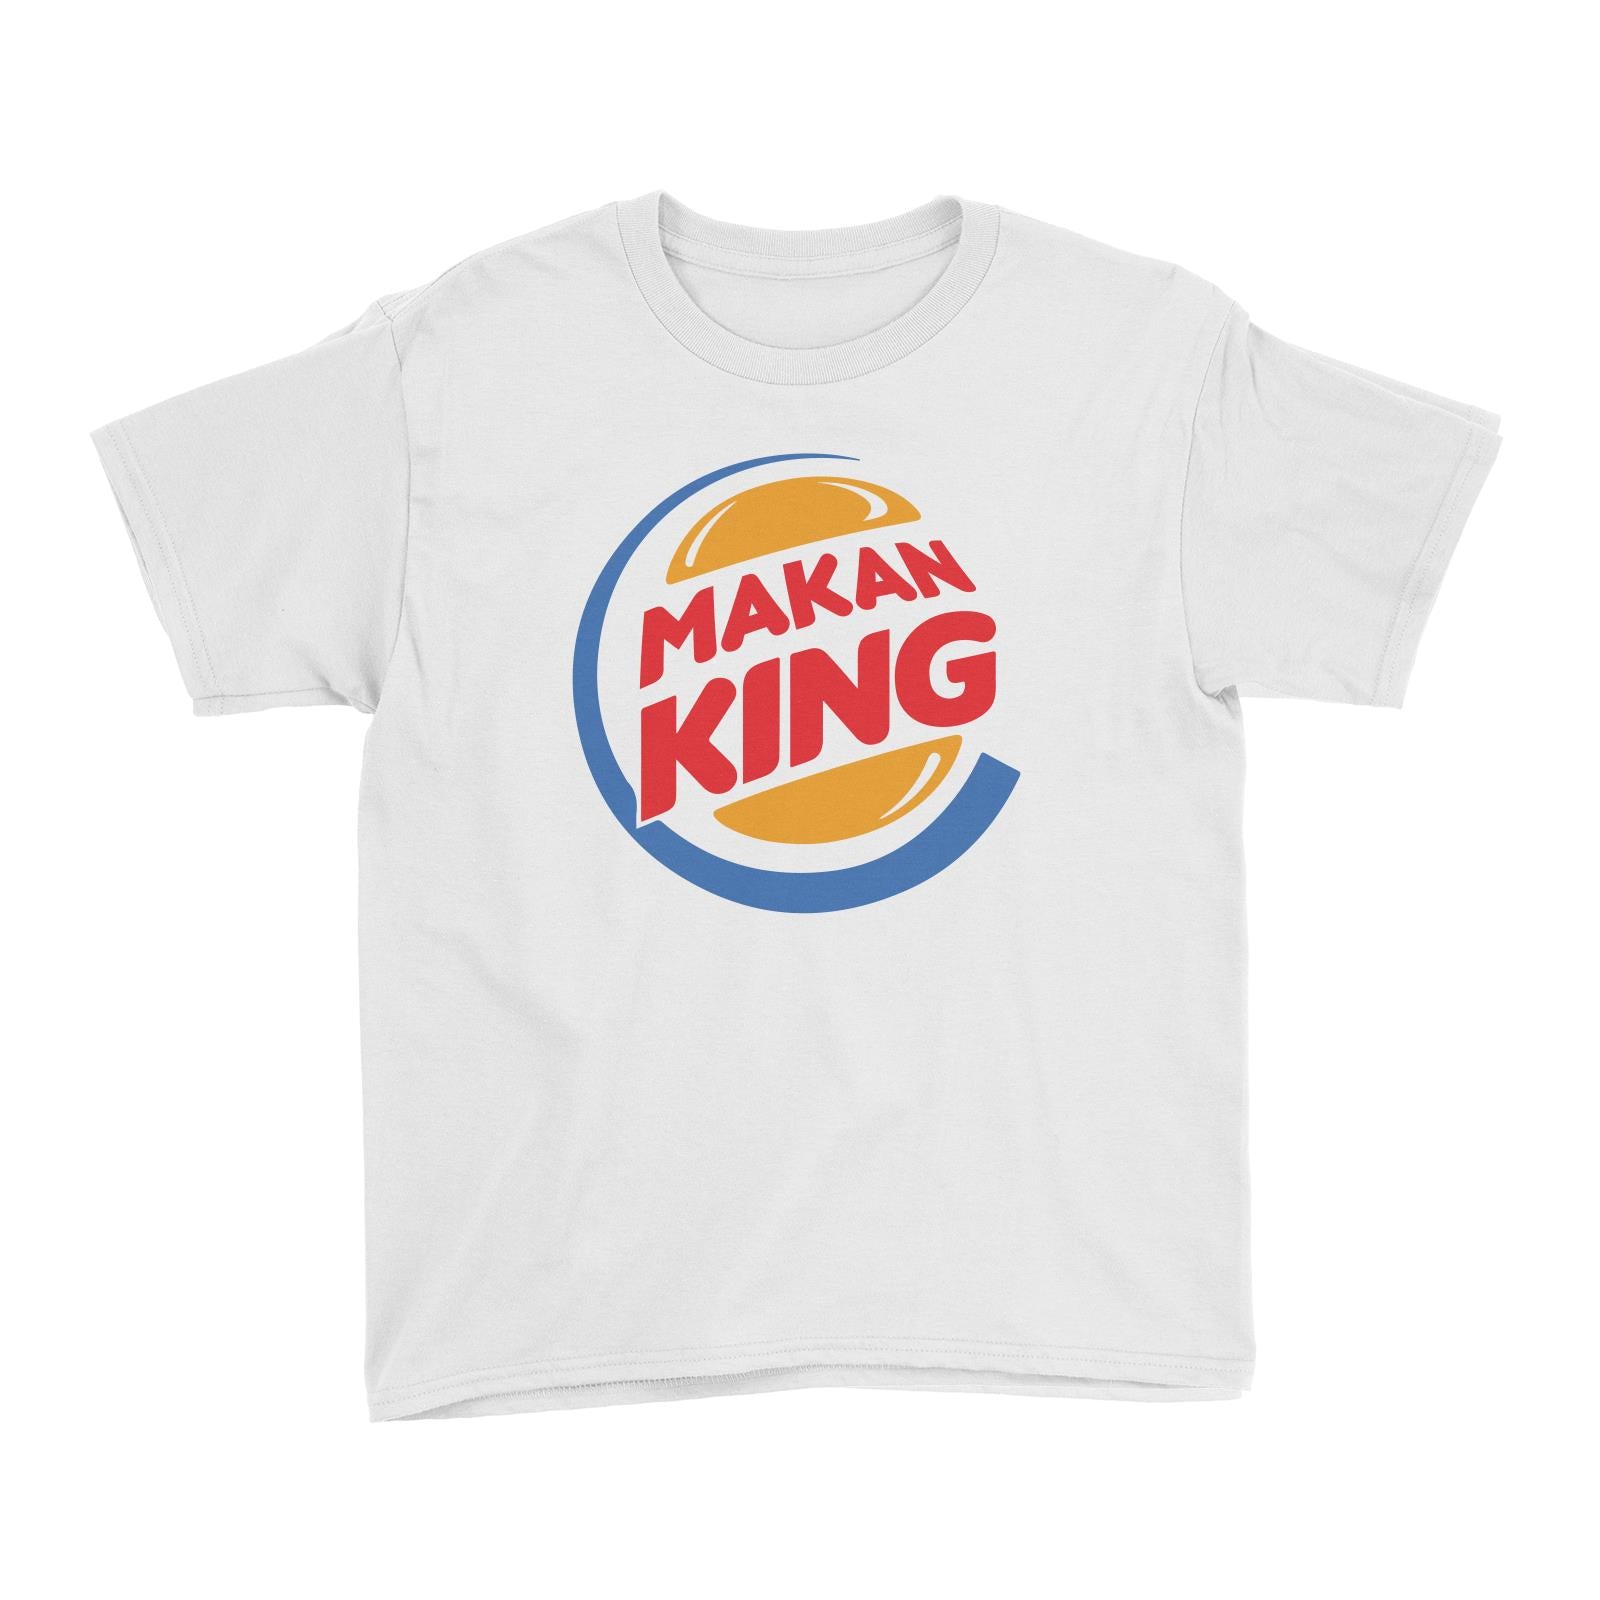 Slang Statement Makan King Kid's T-Shirt